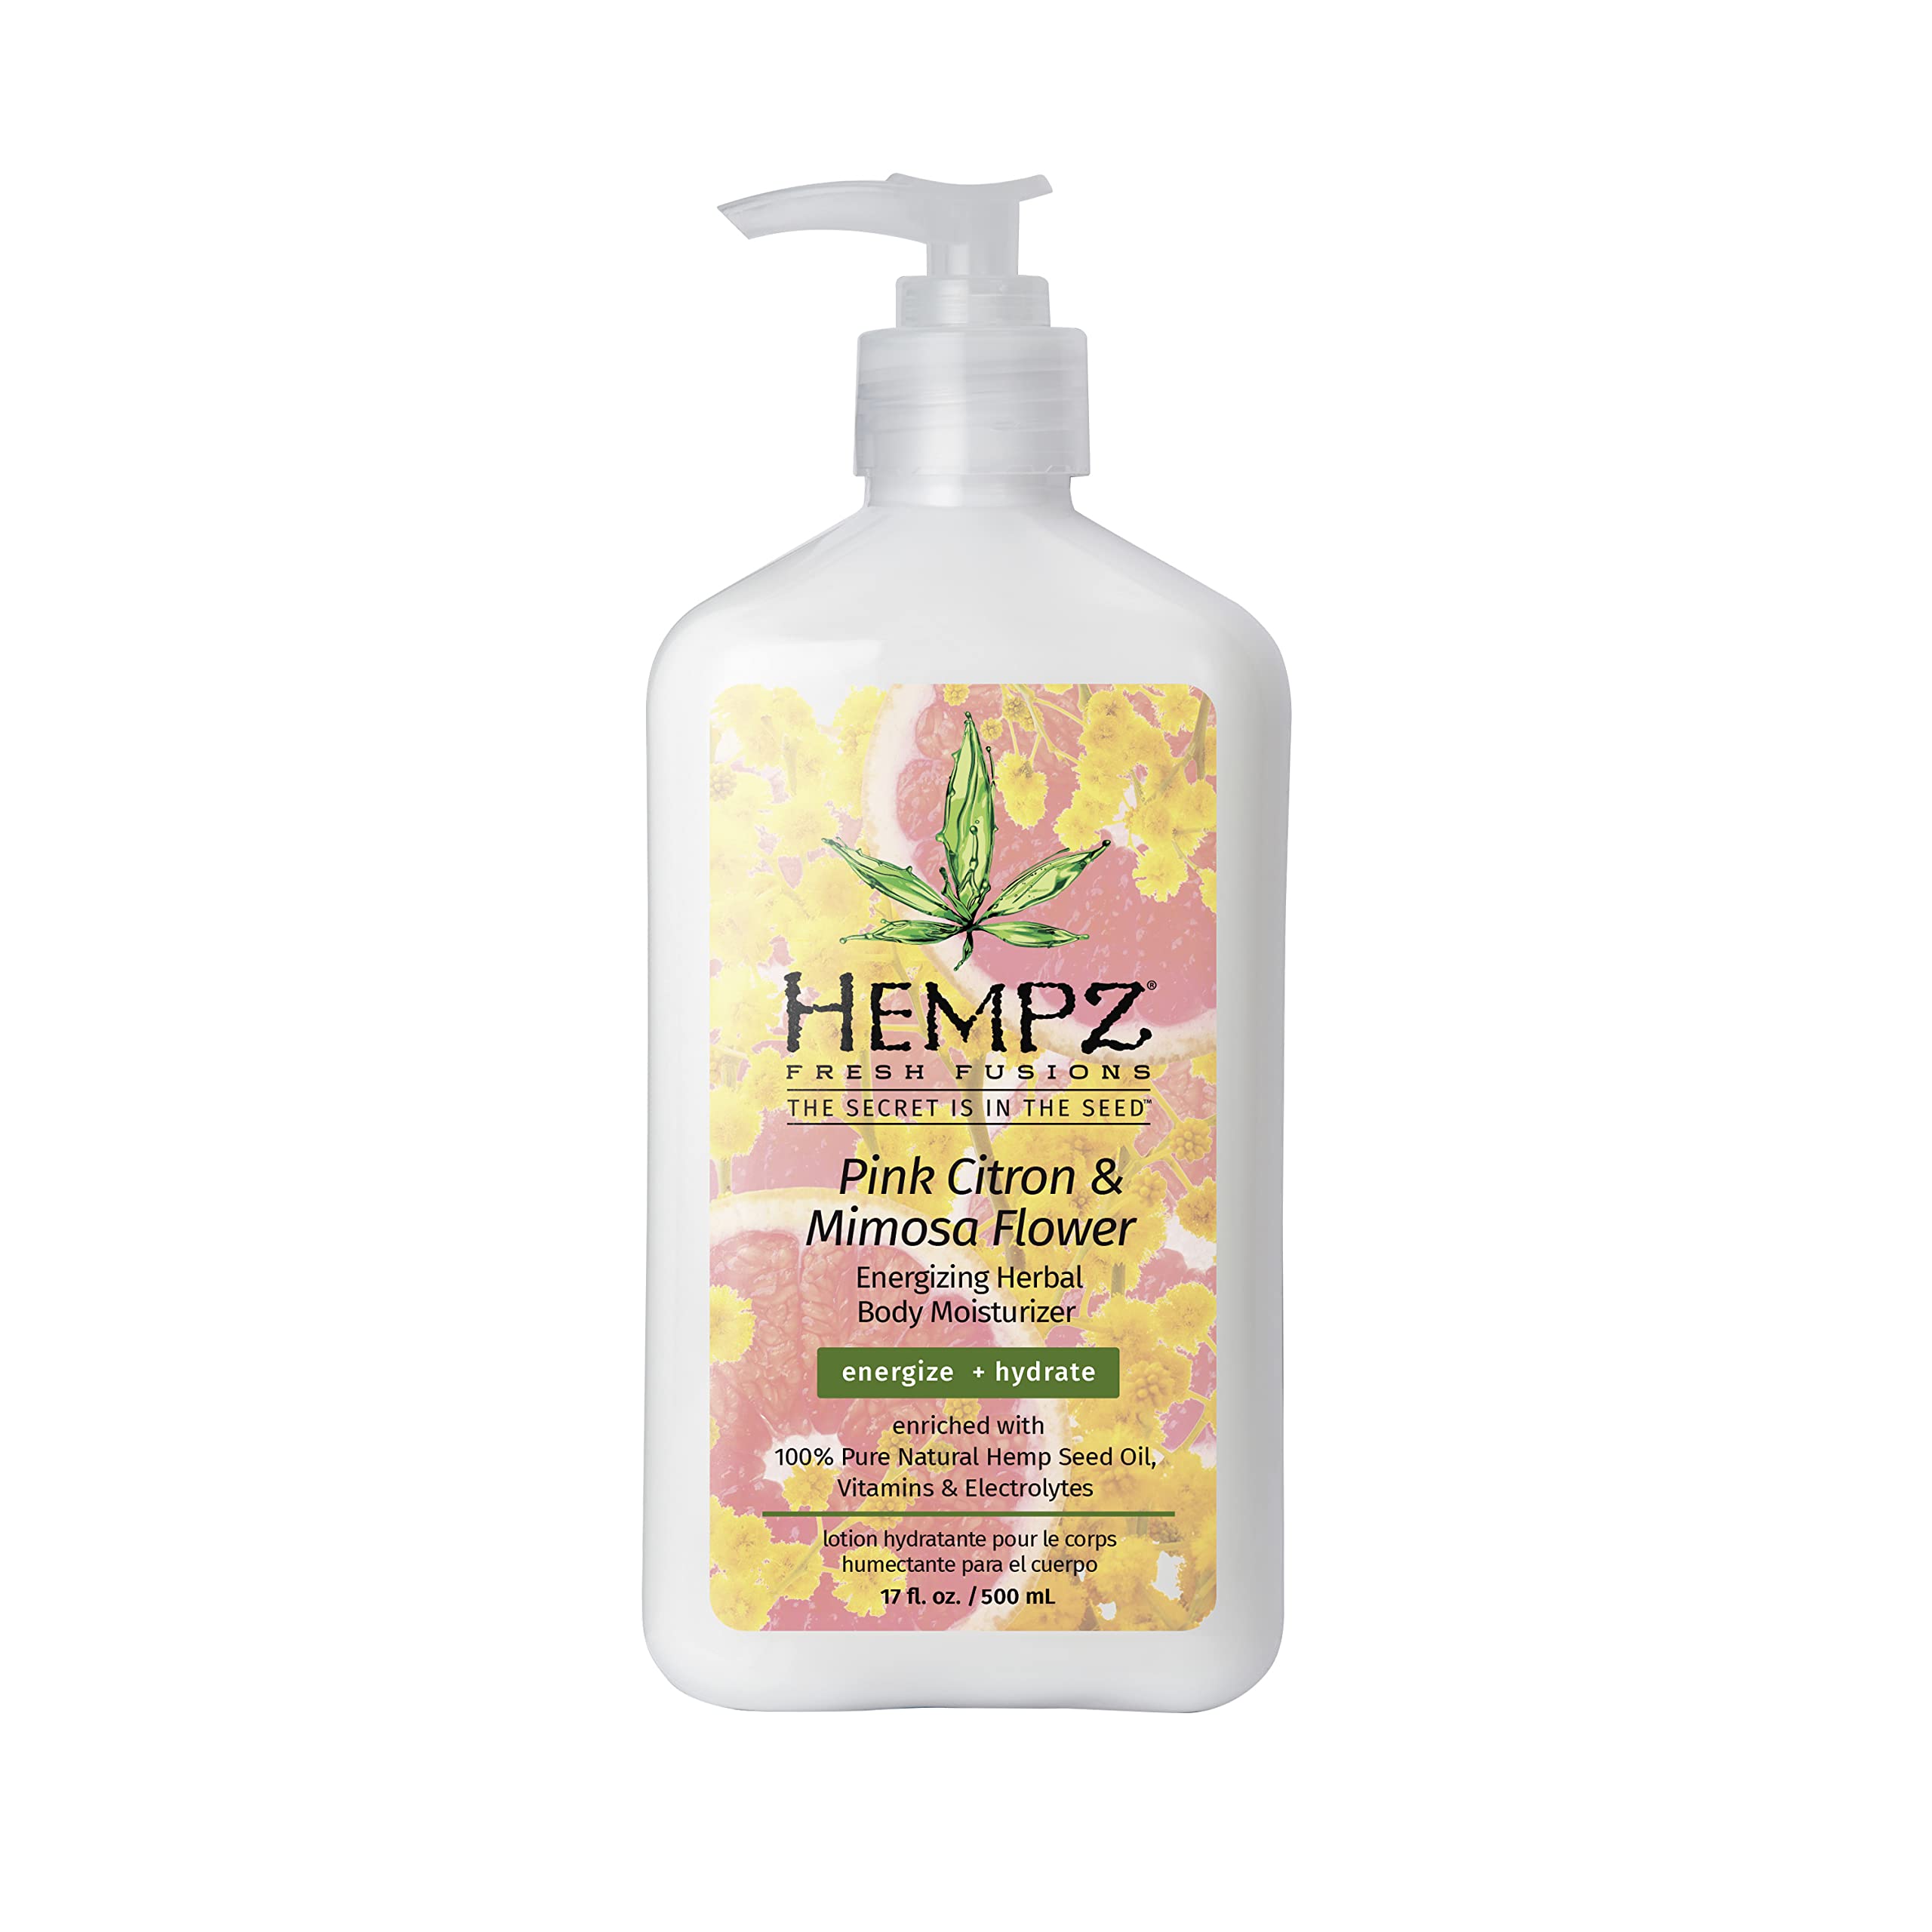 Hempz Fresh Fusions Pink Citron and Mimosa Flower Energizing Herbal Body Moisturizer Unisex Moisturizer 17 oz